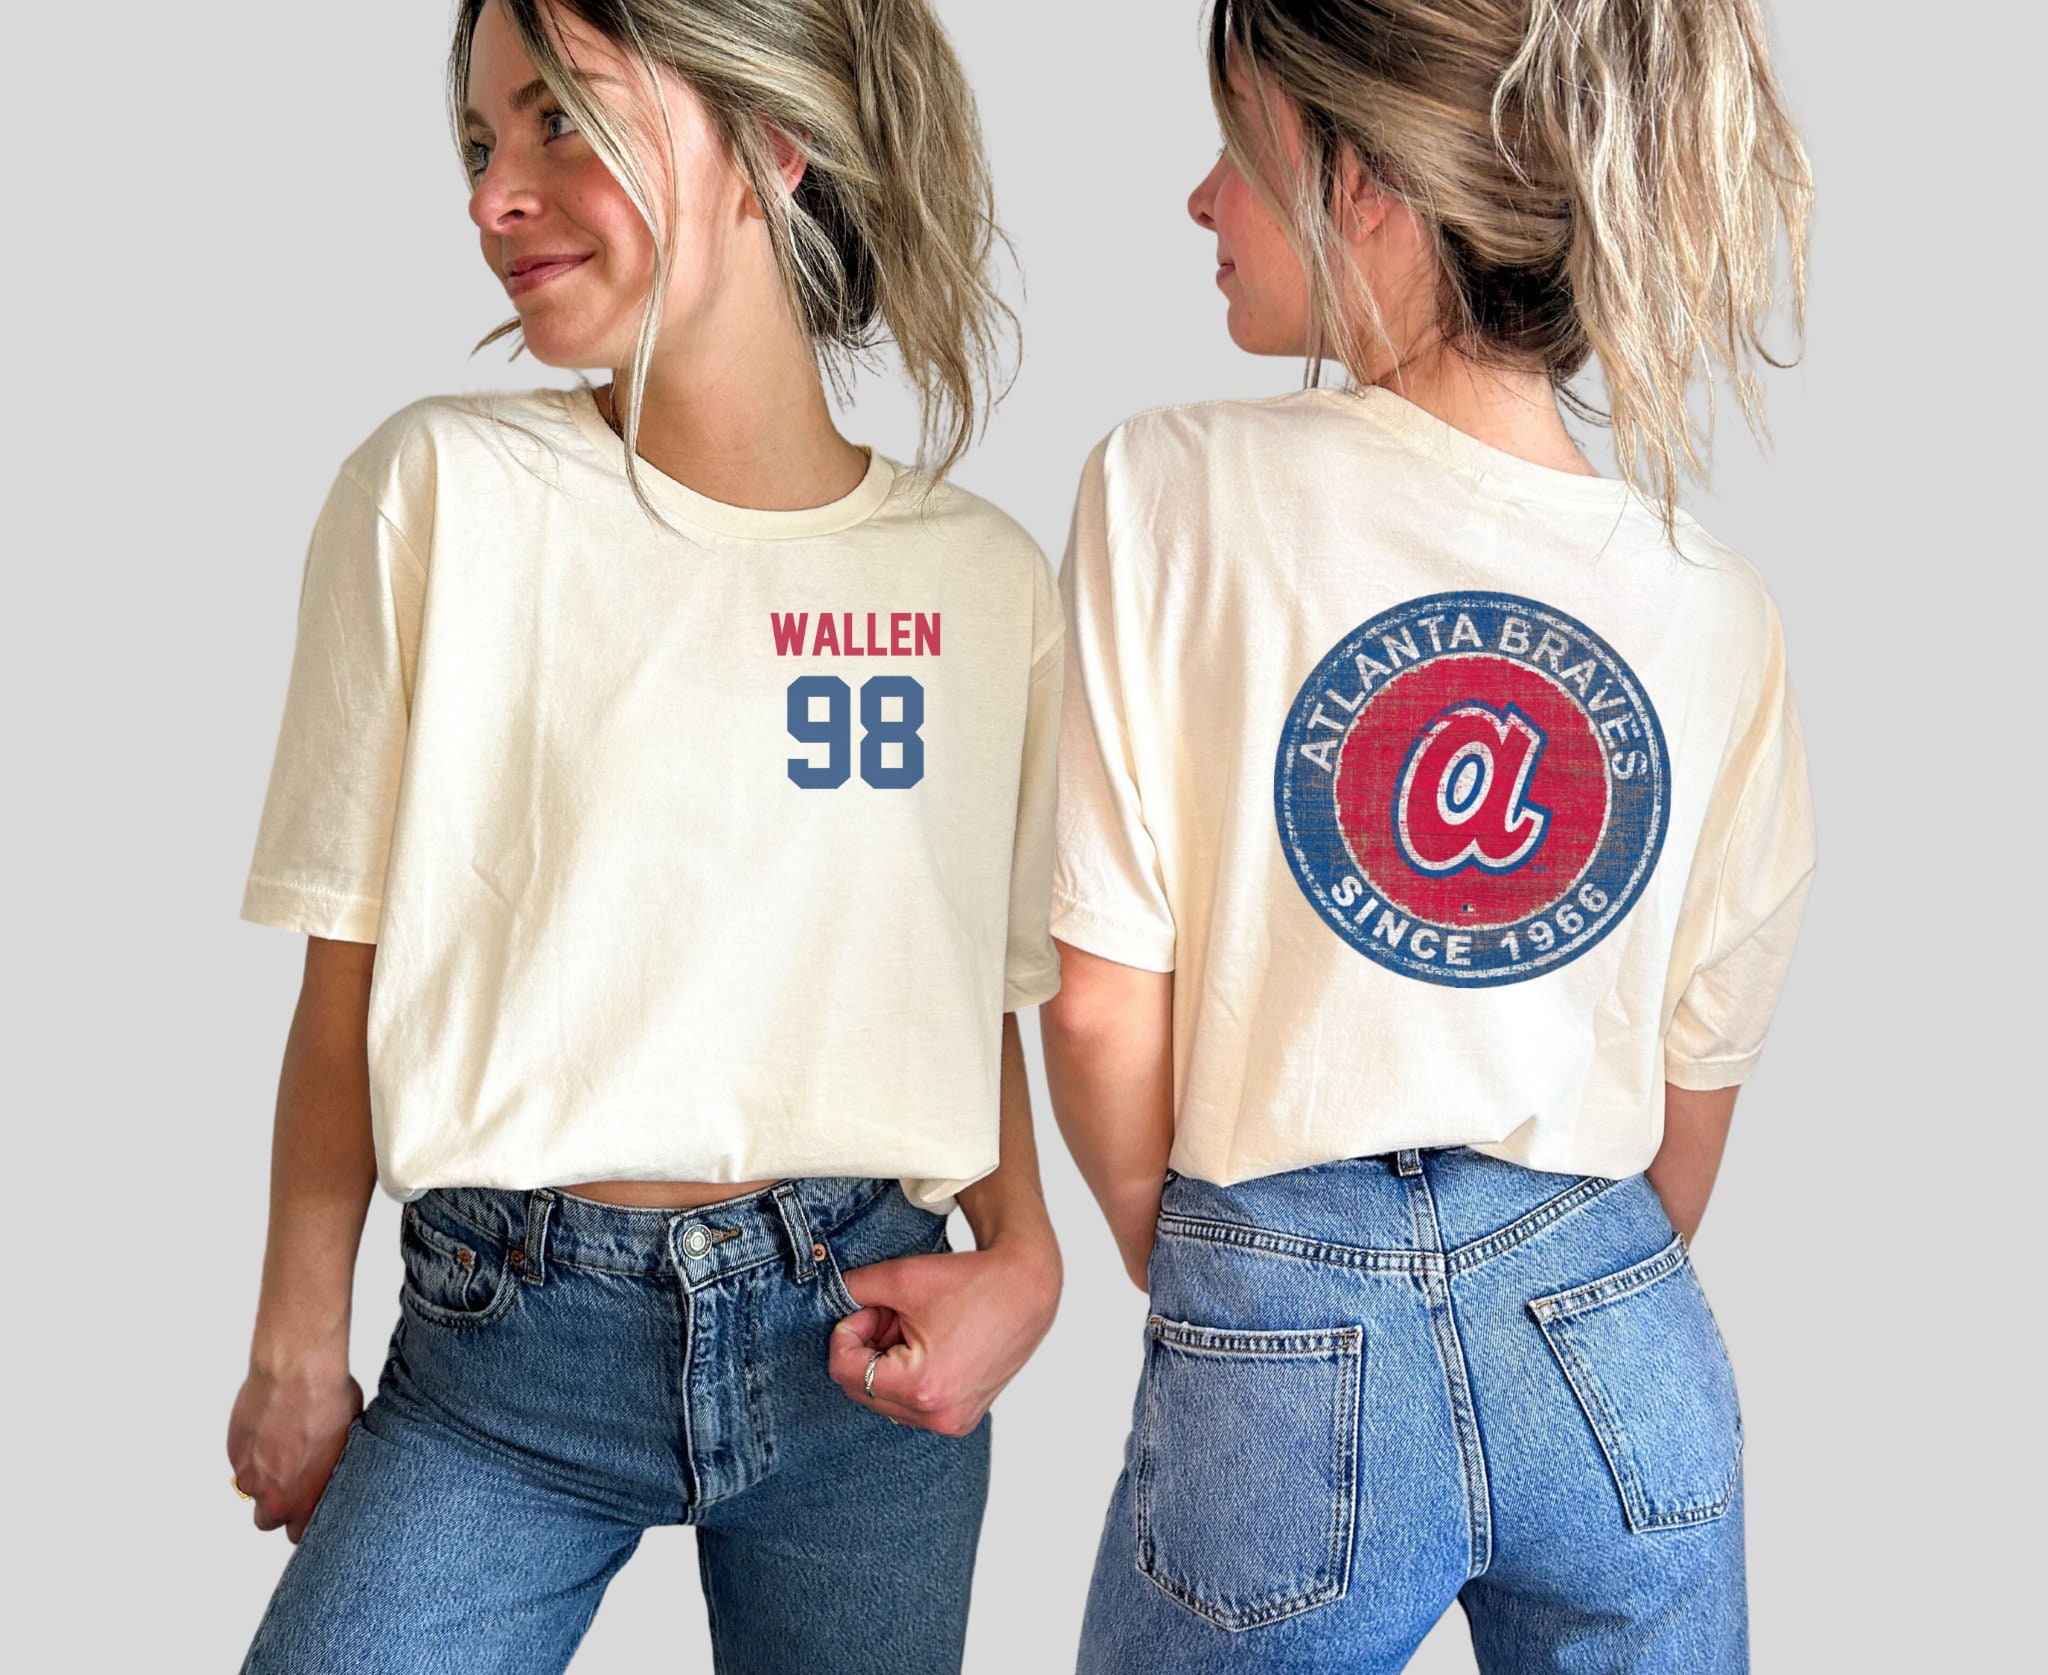 Country Music Concert Shirt, Braves Baseball Tee, Braves Baseball Shirt,  Country Music Shirt, Gift For Her, 98 Braves Shirt, Women Singer Fan T  Shirts